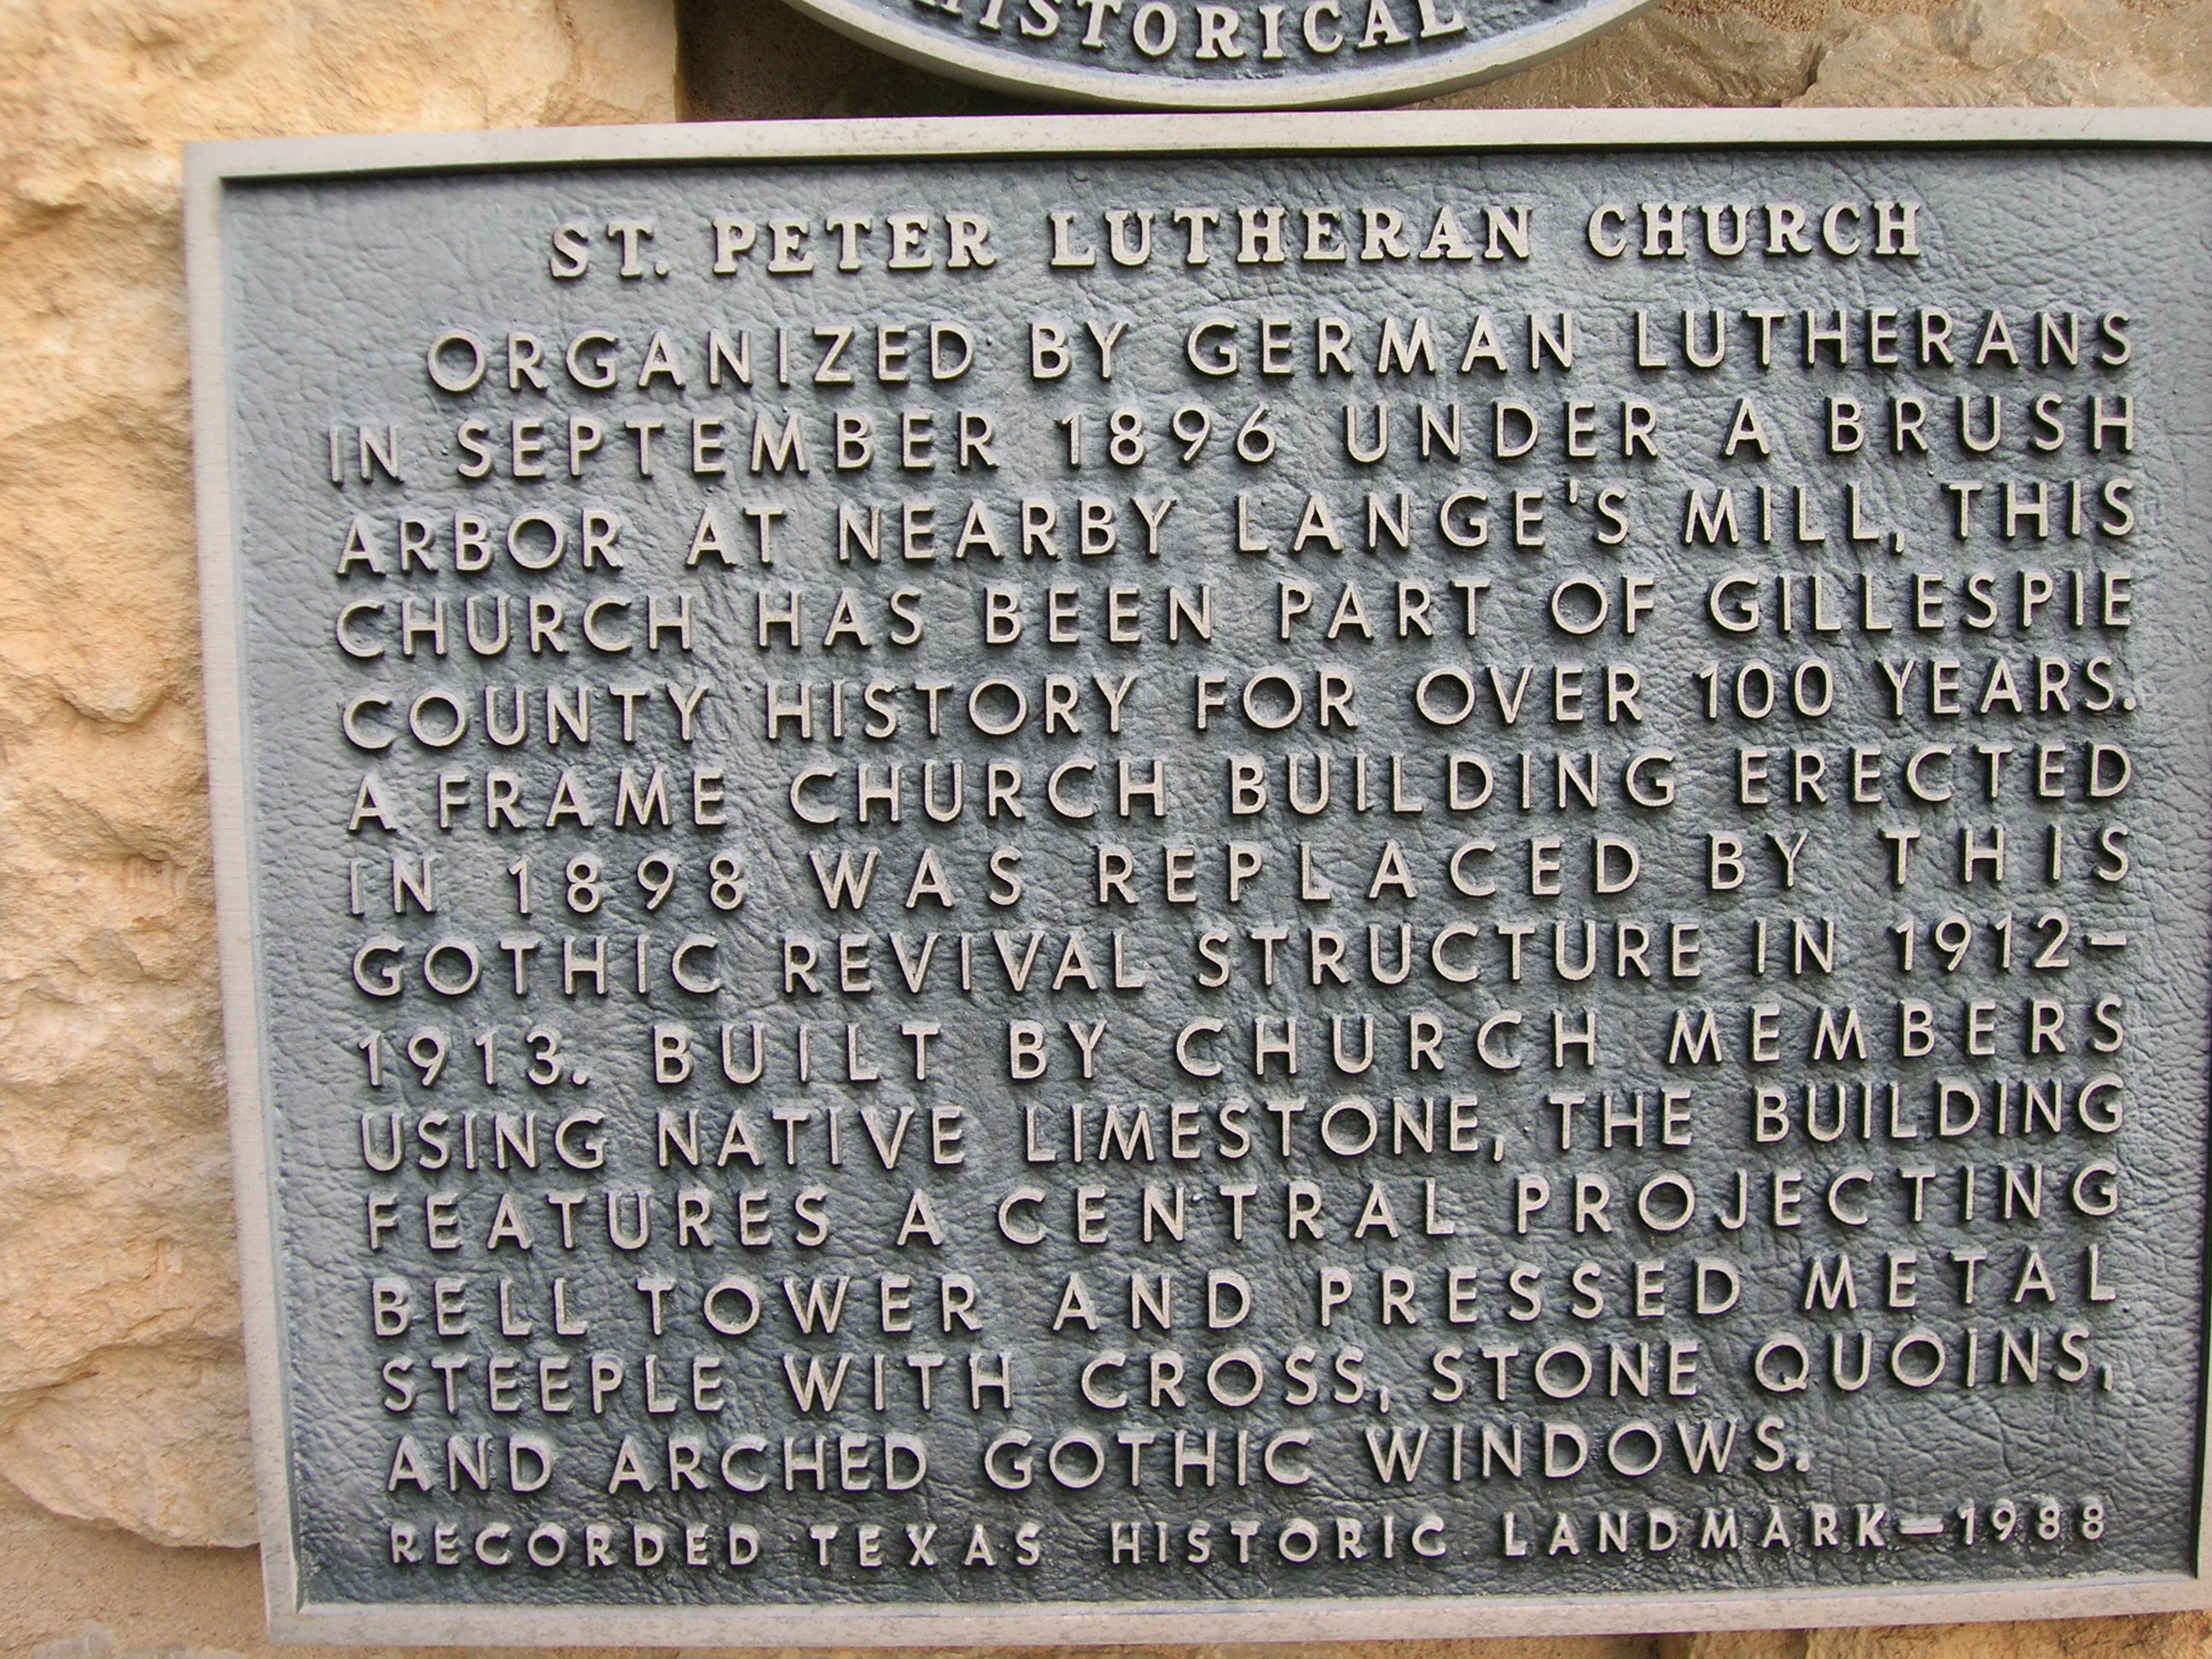 St. Peter Lutheran Church Information